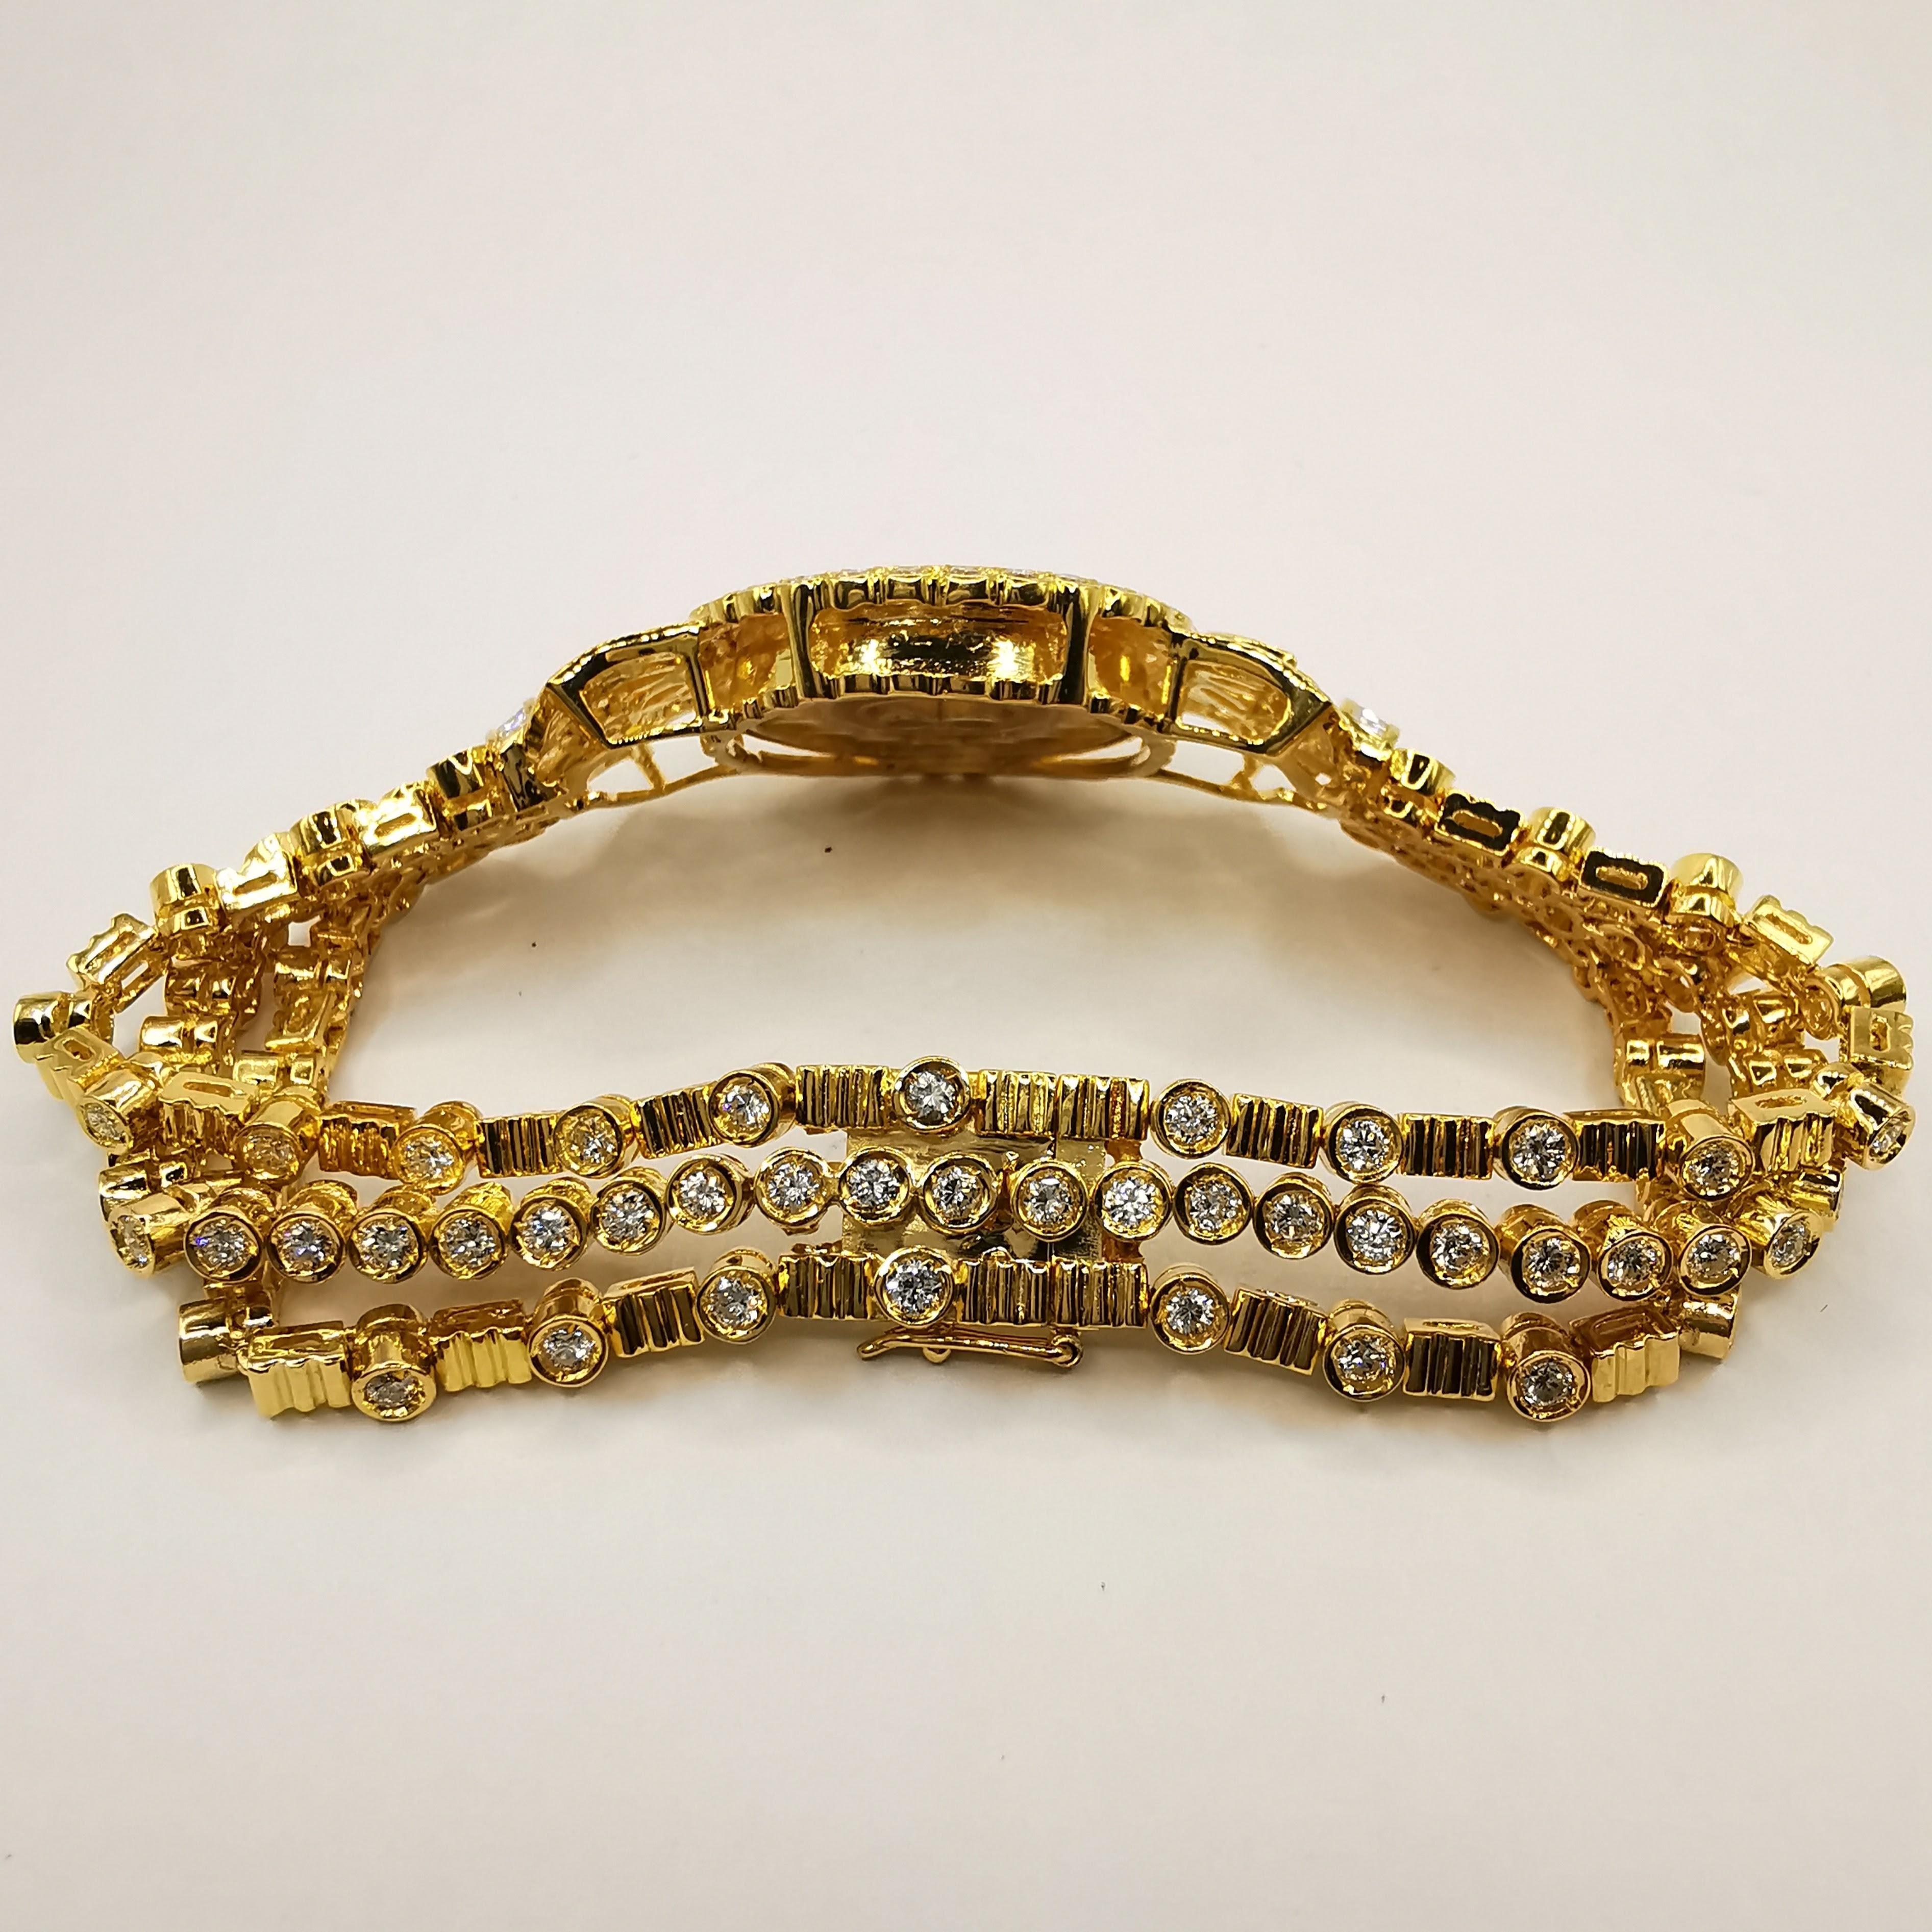 5.42 Carat Happy Diamond Bracelet in 18k Yellow Gold For Sale 1